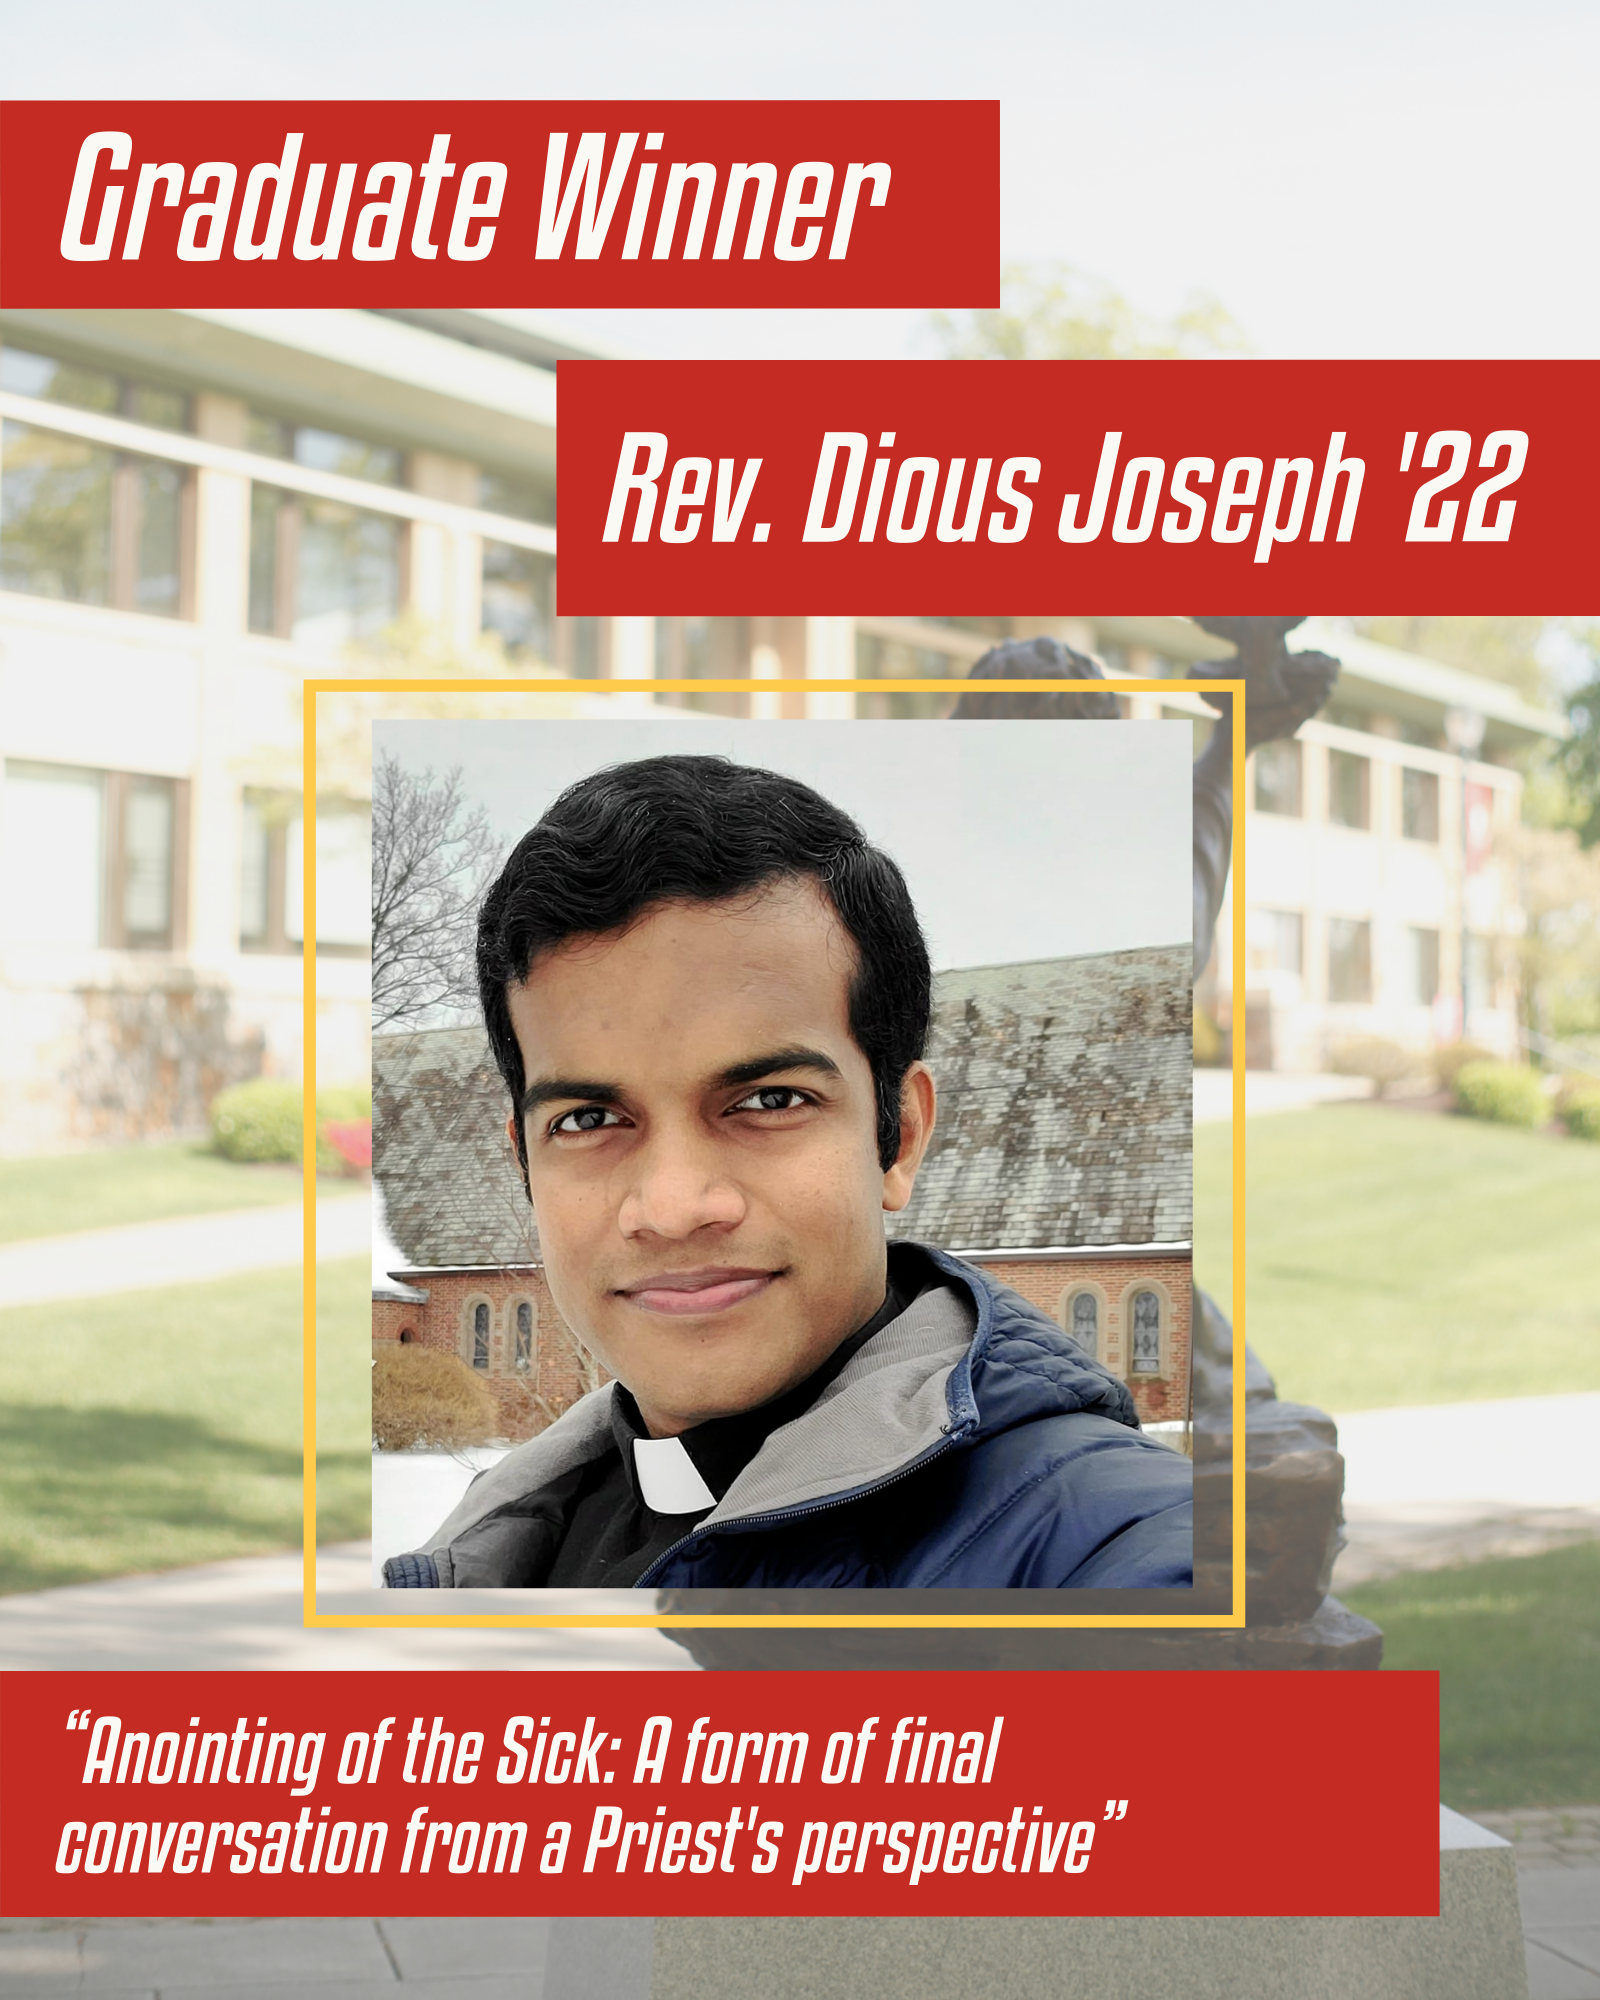 2022 graduate student winner Rev. Dious Joseph